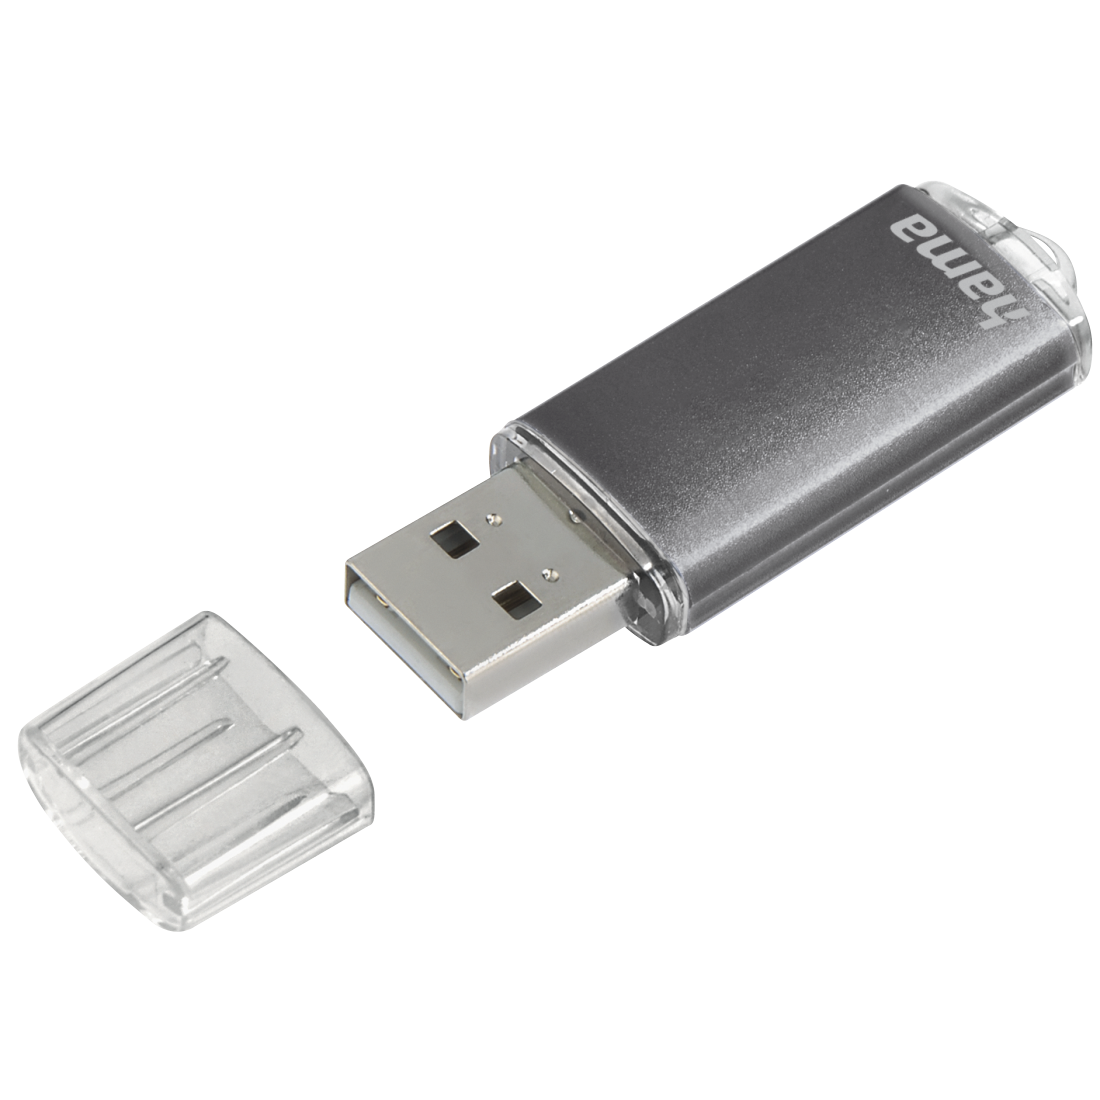 00090983 Hama "Laeta" USB Flash Drive, USB 2.0, 16 GB, 10 MB/s, grey